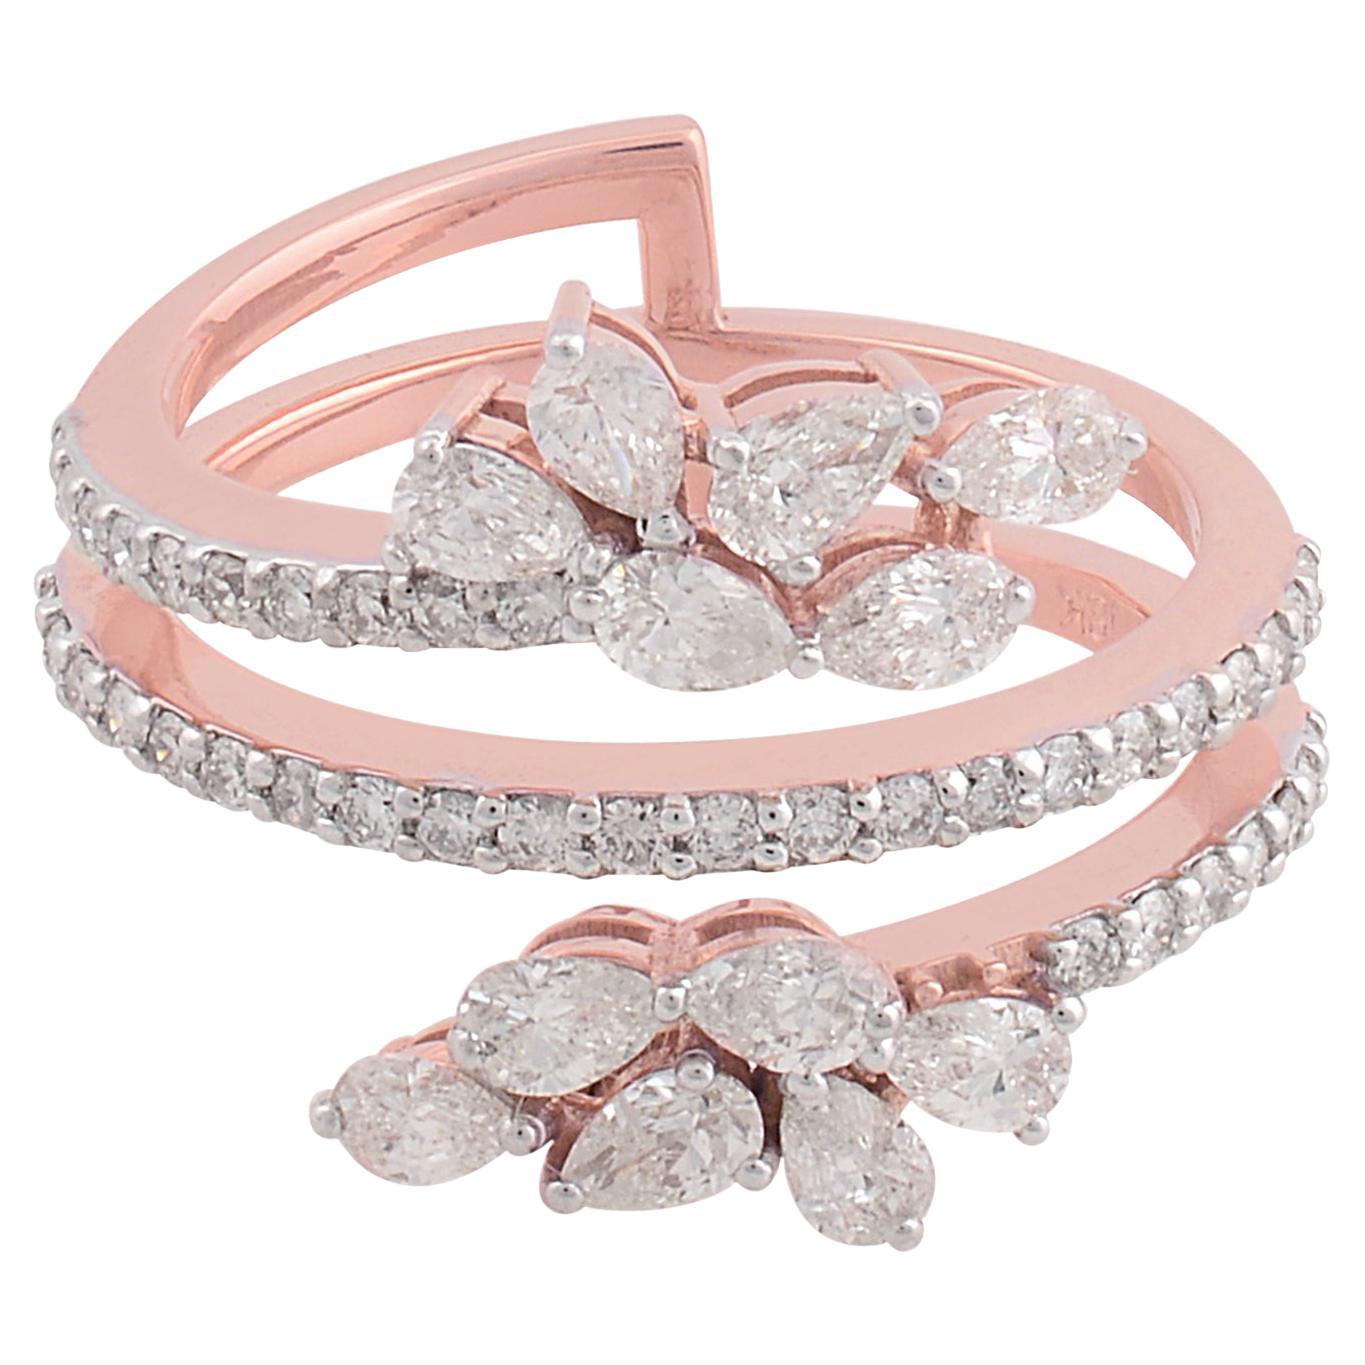 1.17 Carat SI Clarity HI Color Pear Diamond Ring 18k Rose Gold Handmade Jewelry